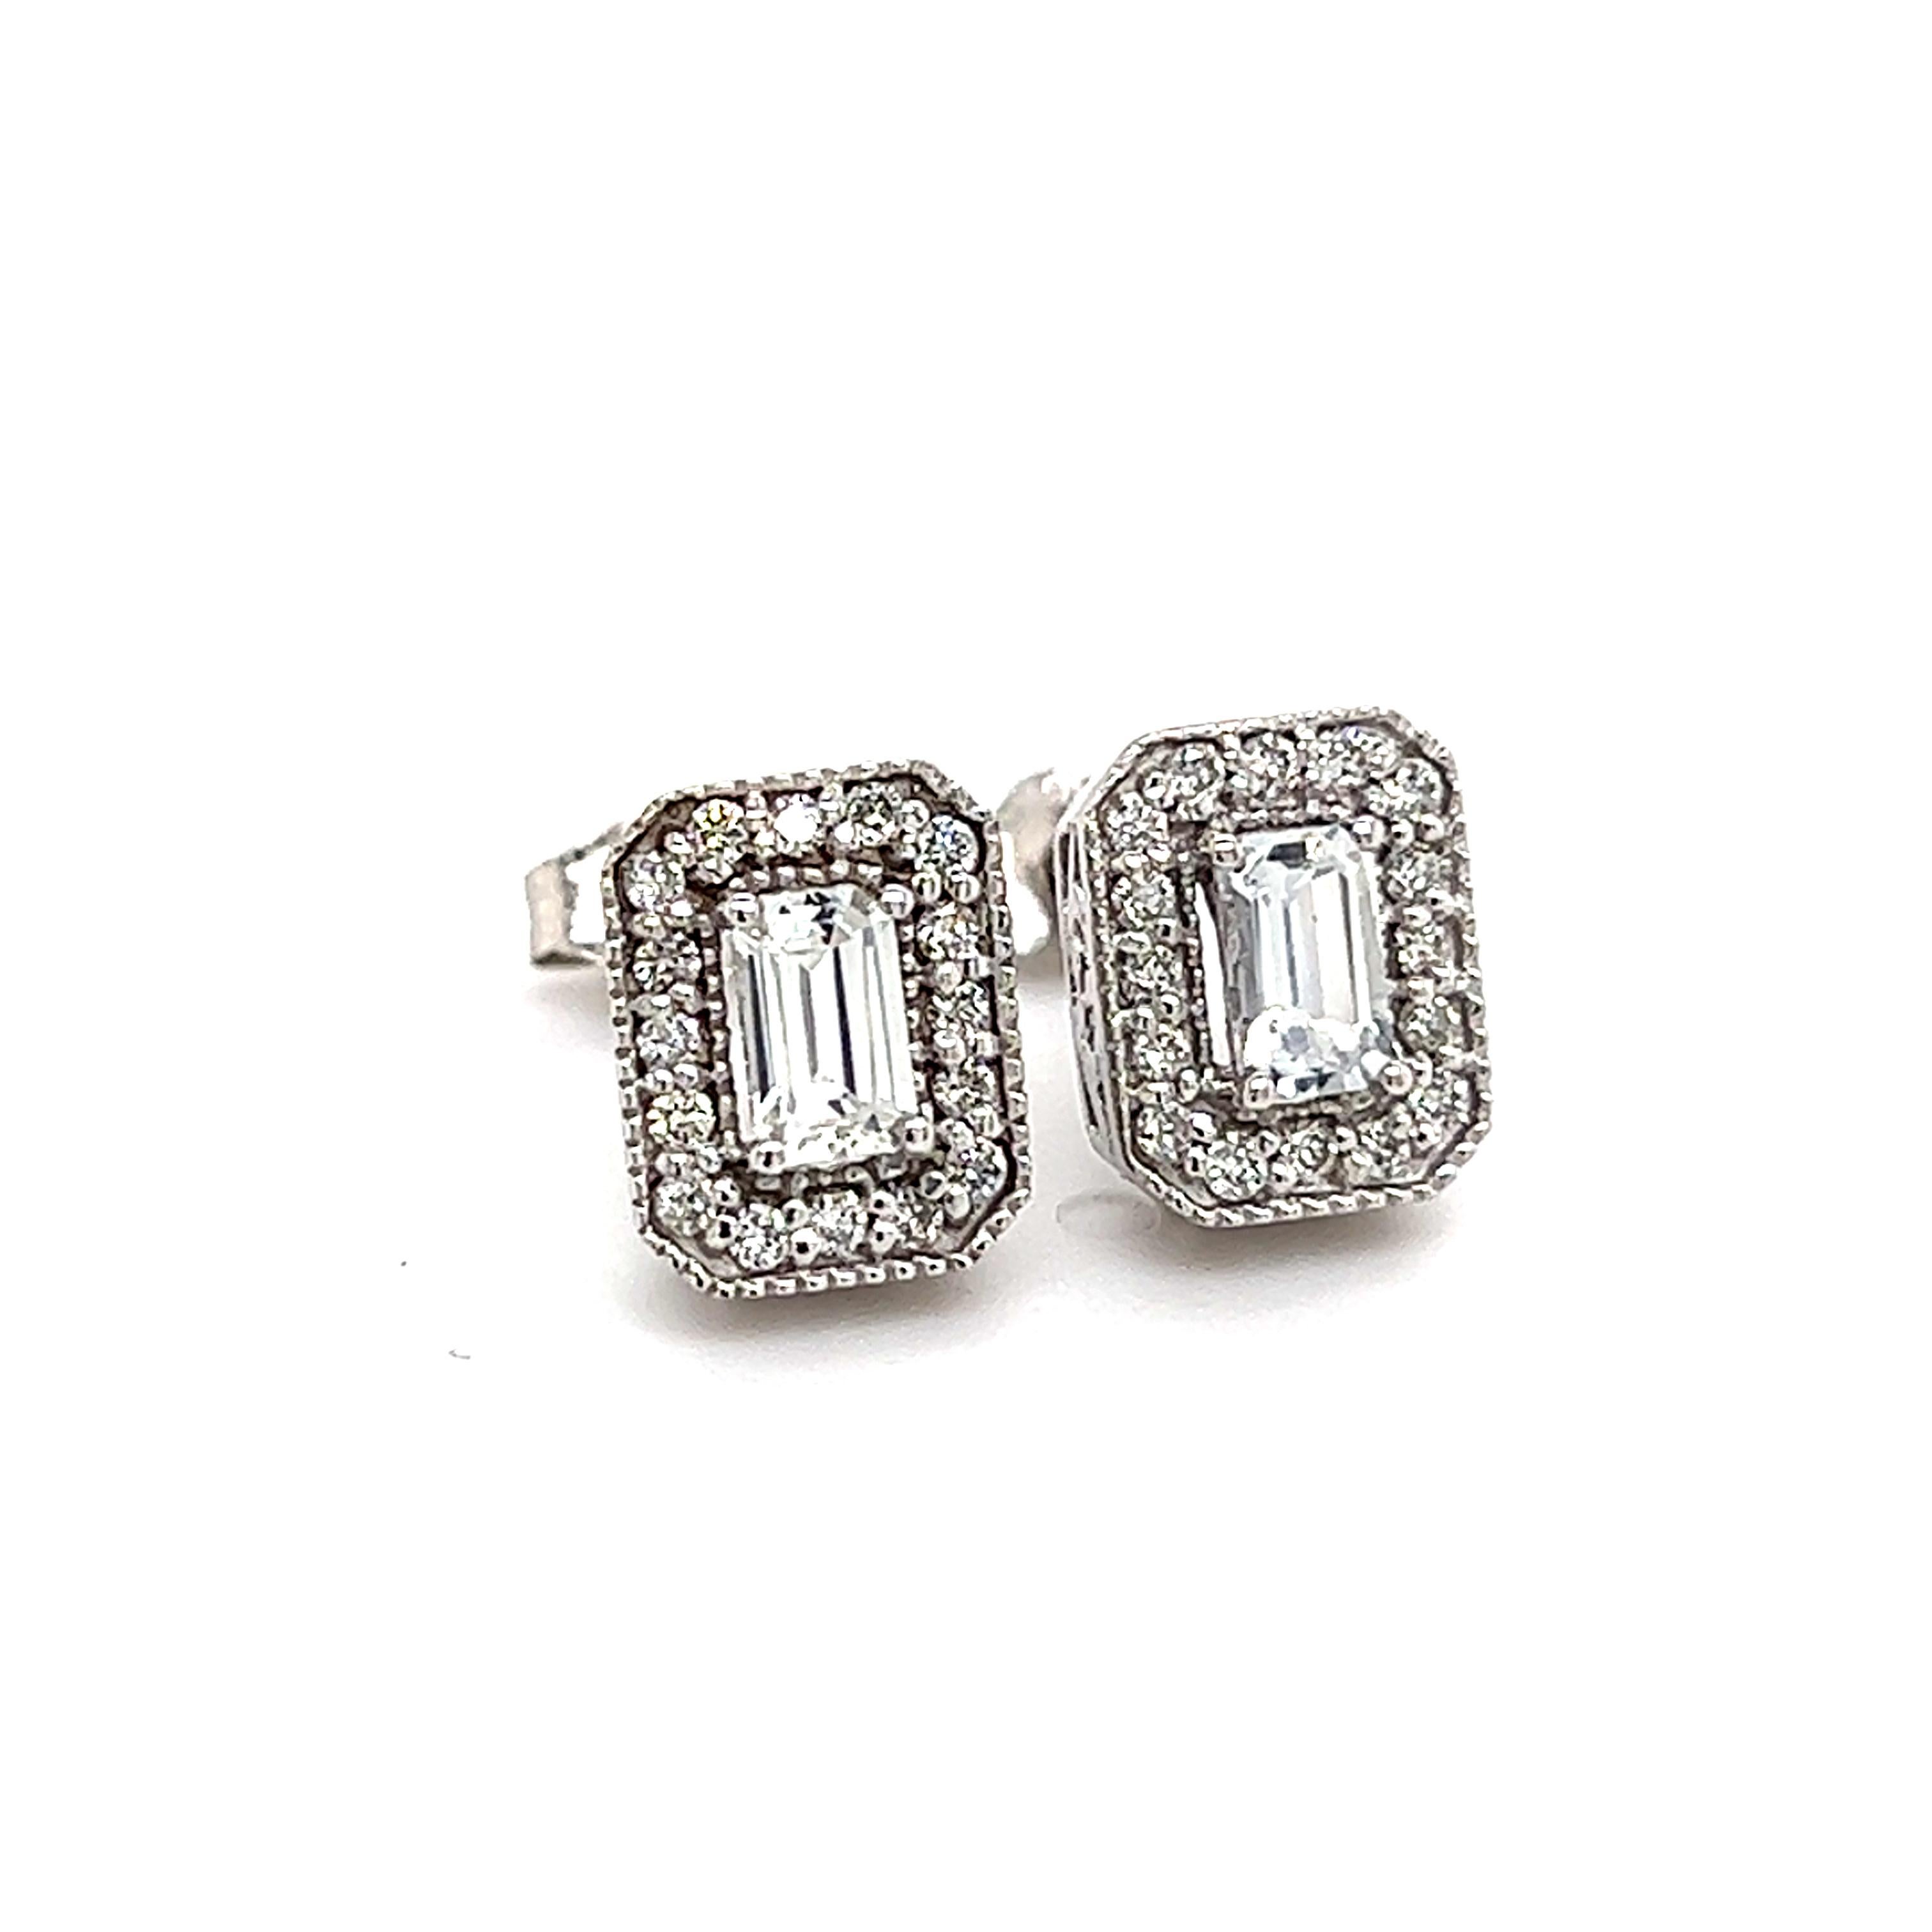 Natural Sapphire Diamond Stud Earrings 14k W Gold 0.96 TCW Certified For Sale 1